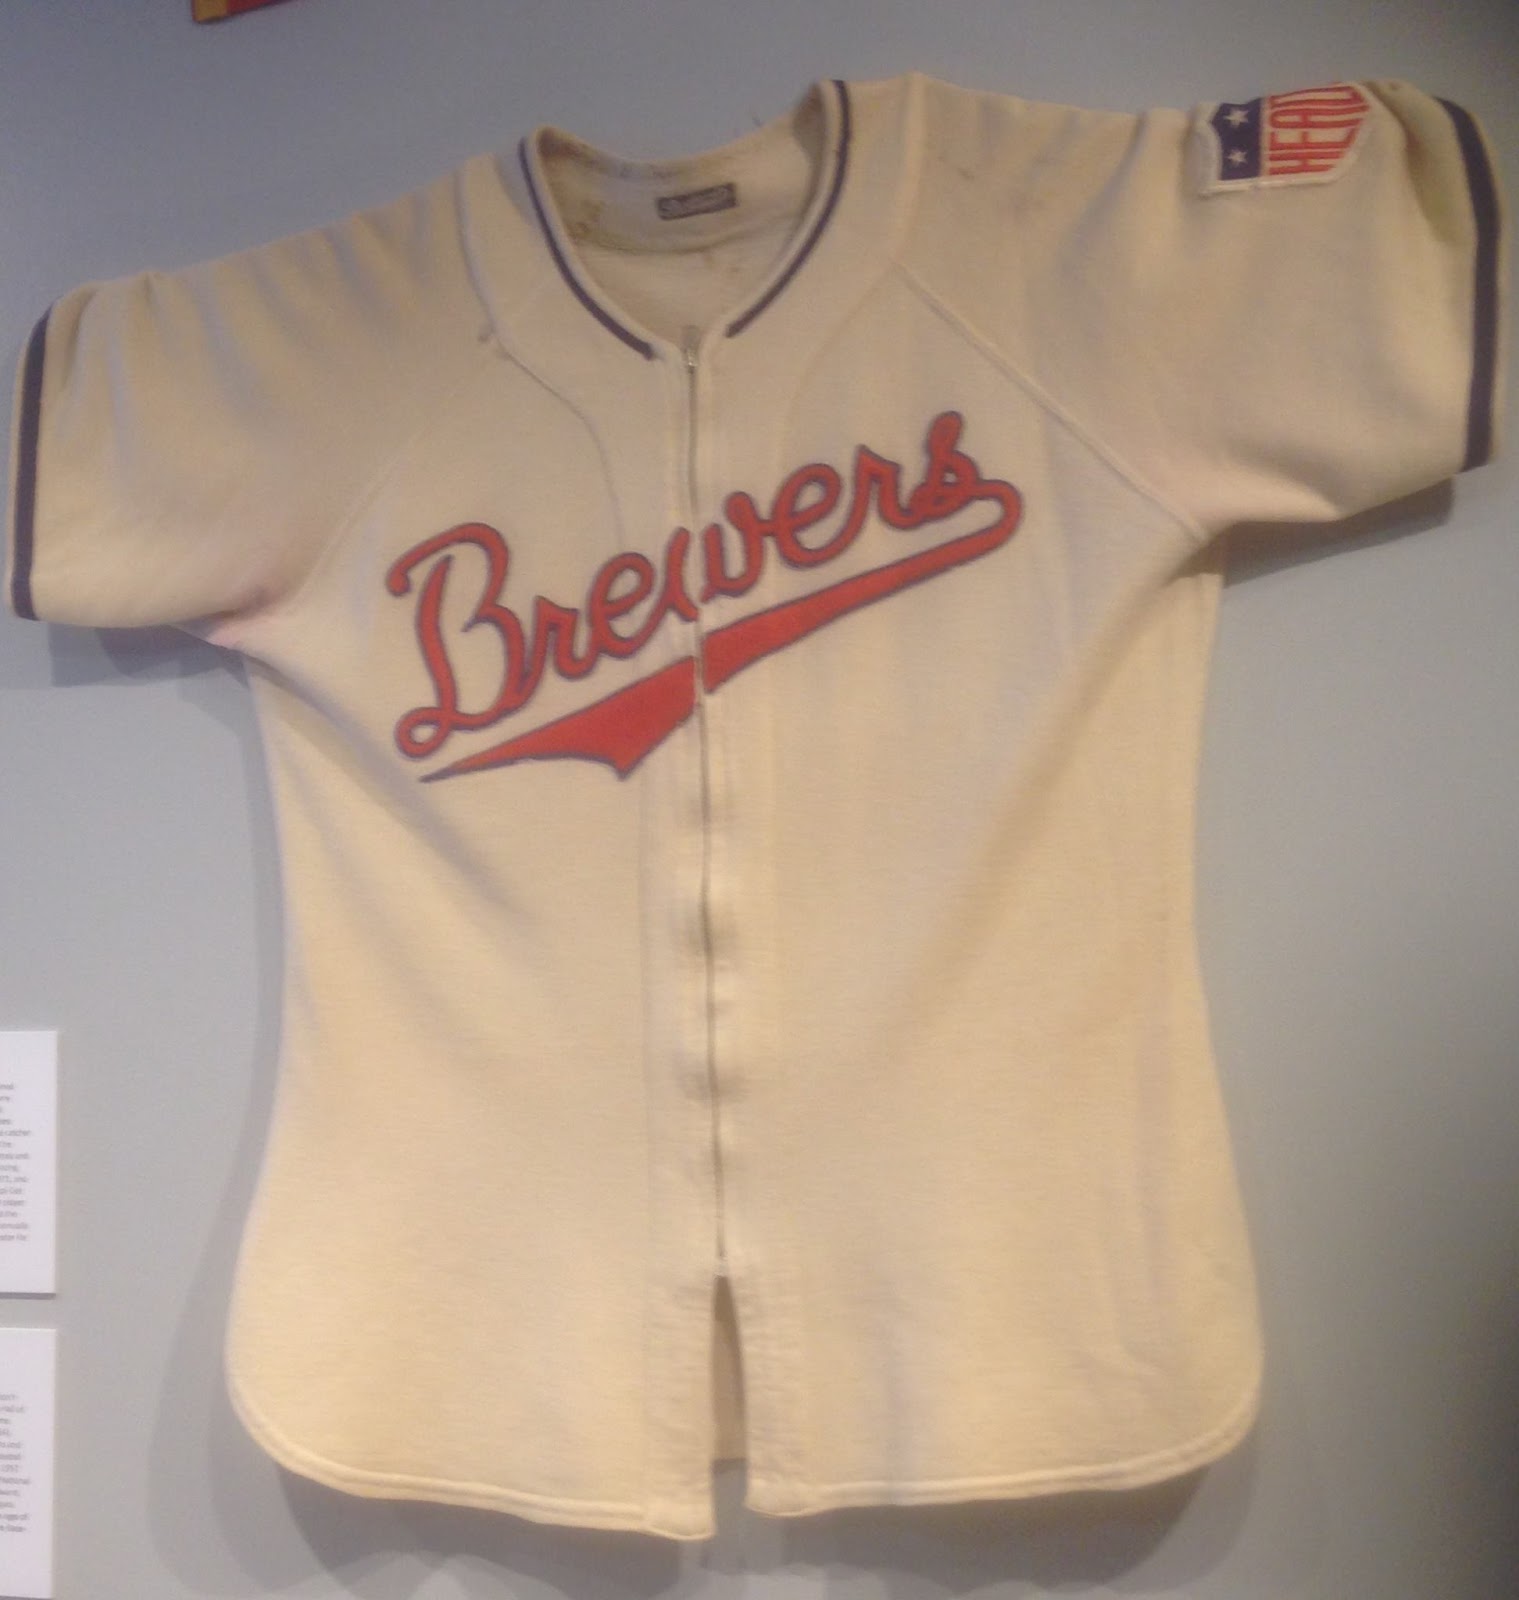 Borchert Field: 1942 Brewers Jersey on Display